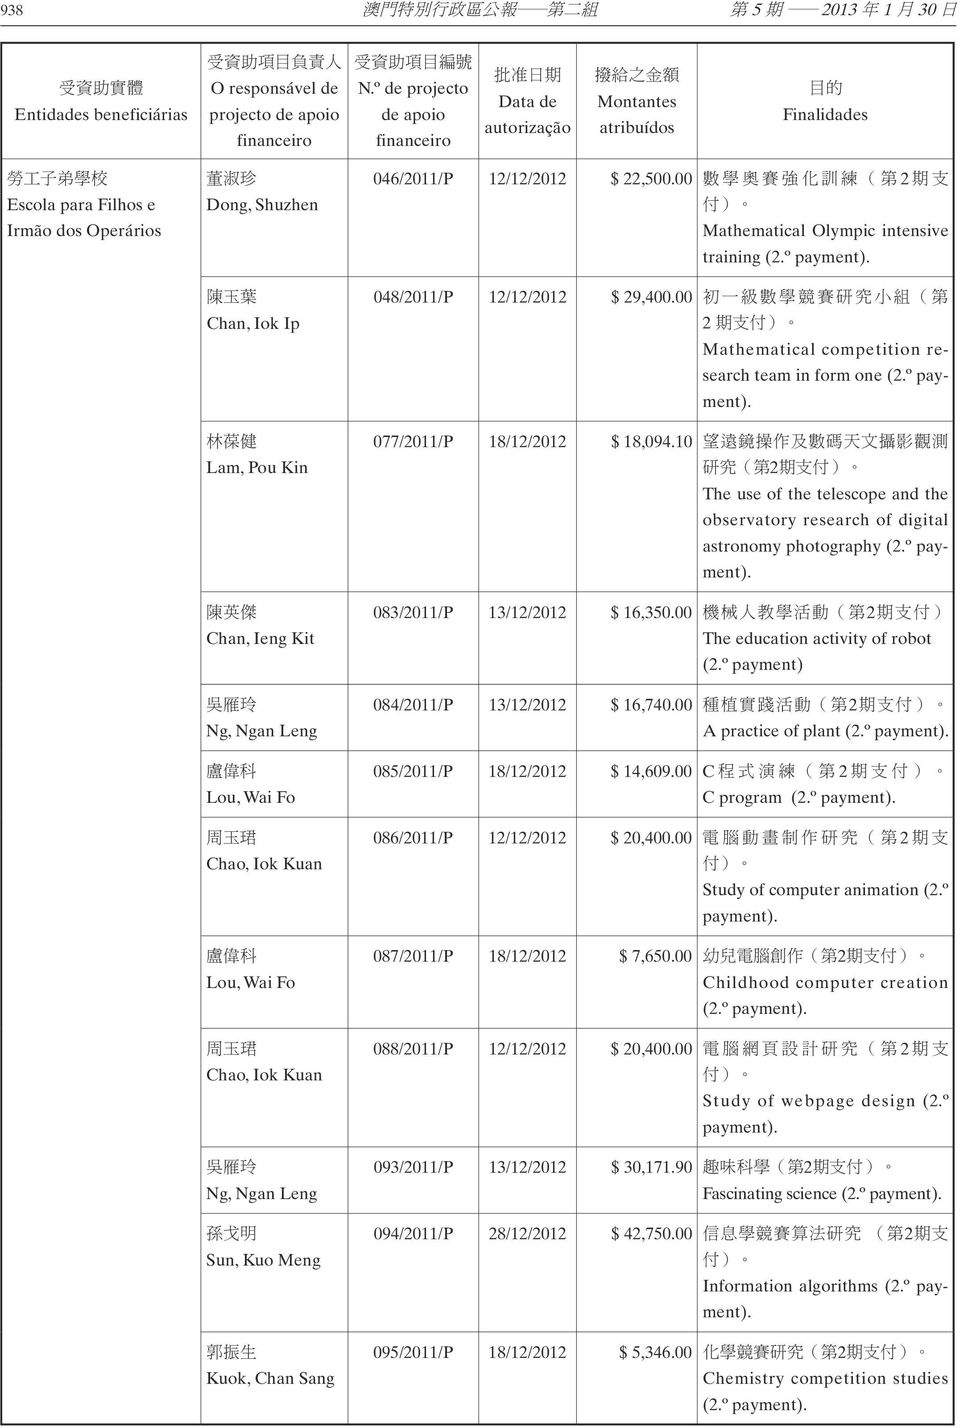 Chao, Iok Kuan Lou, Wai Fo Chao, Iok Kuan Ng, Ngan Leng Sun, Kuo Meng Kuok, Chan Sang 046/2011/P 12/12/2012 $ 22,500.00 2 Mathematical Olympic intensive training (2.º payment).